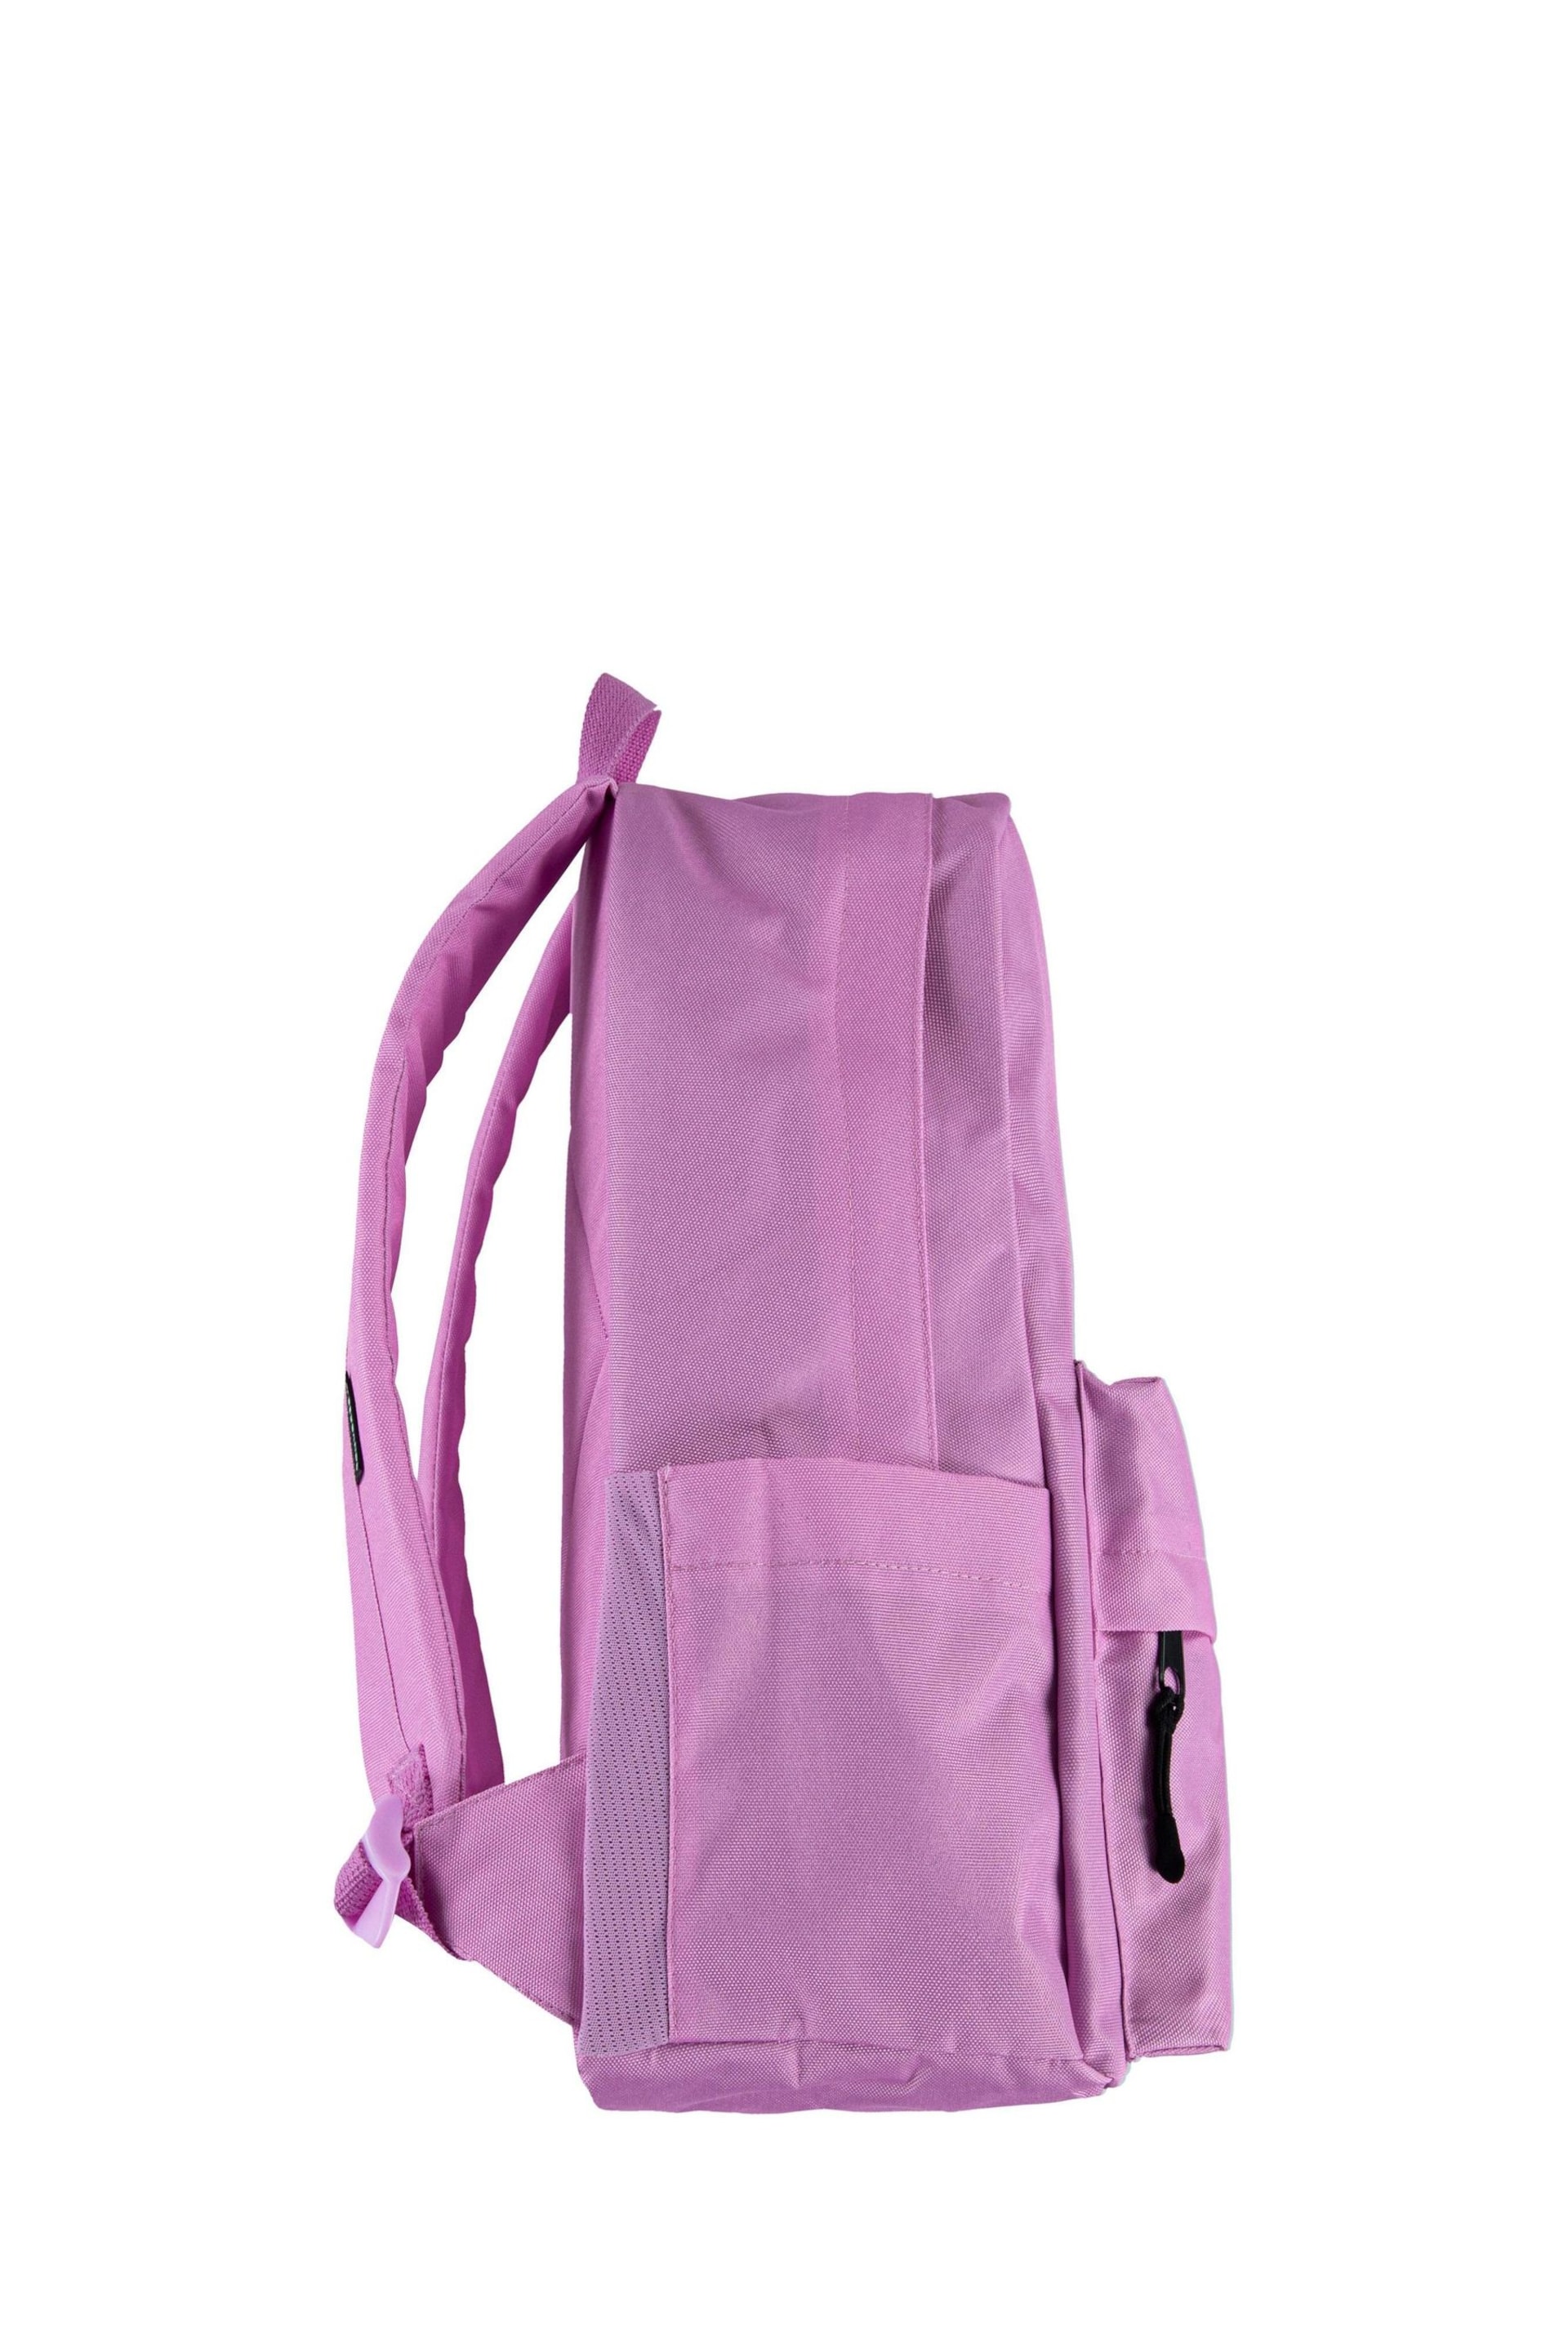 Converse Pink Bag - Image 4 of 7